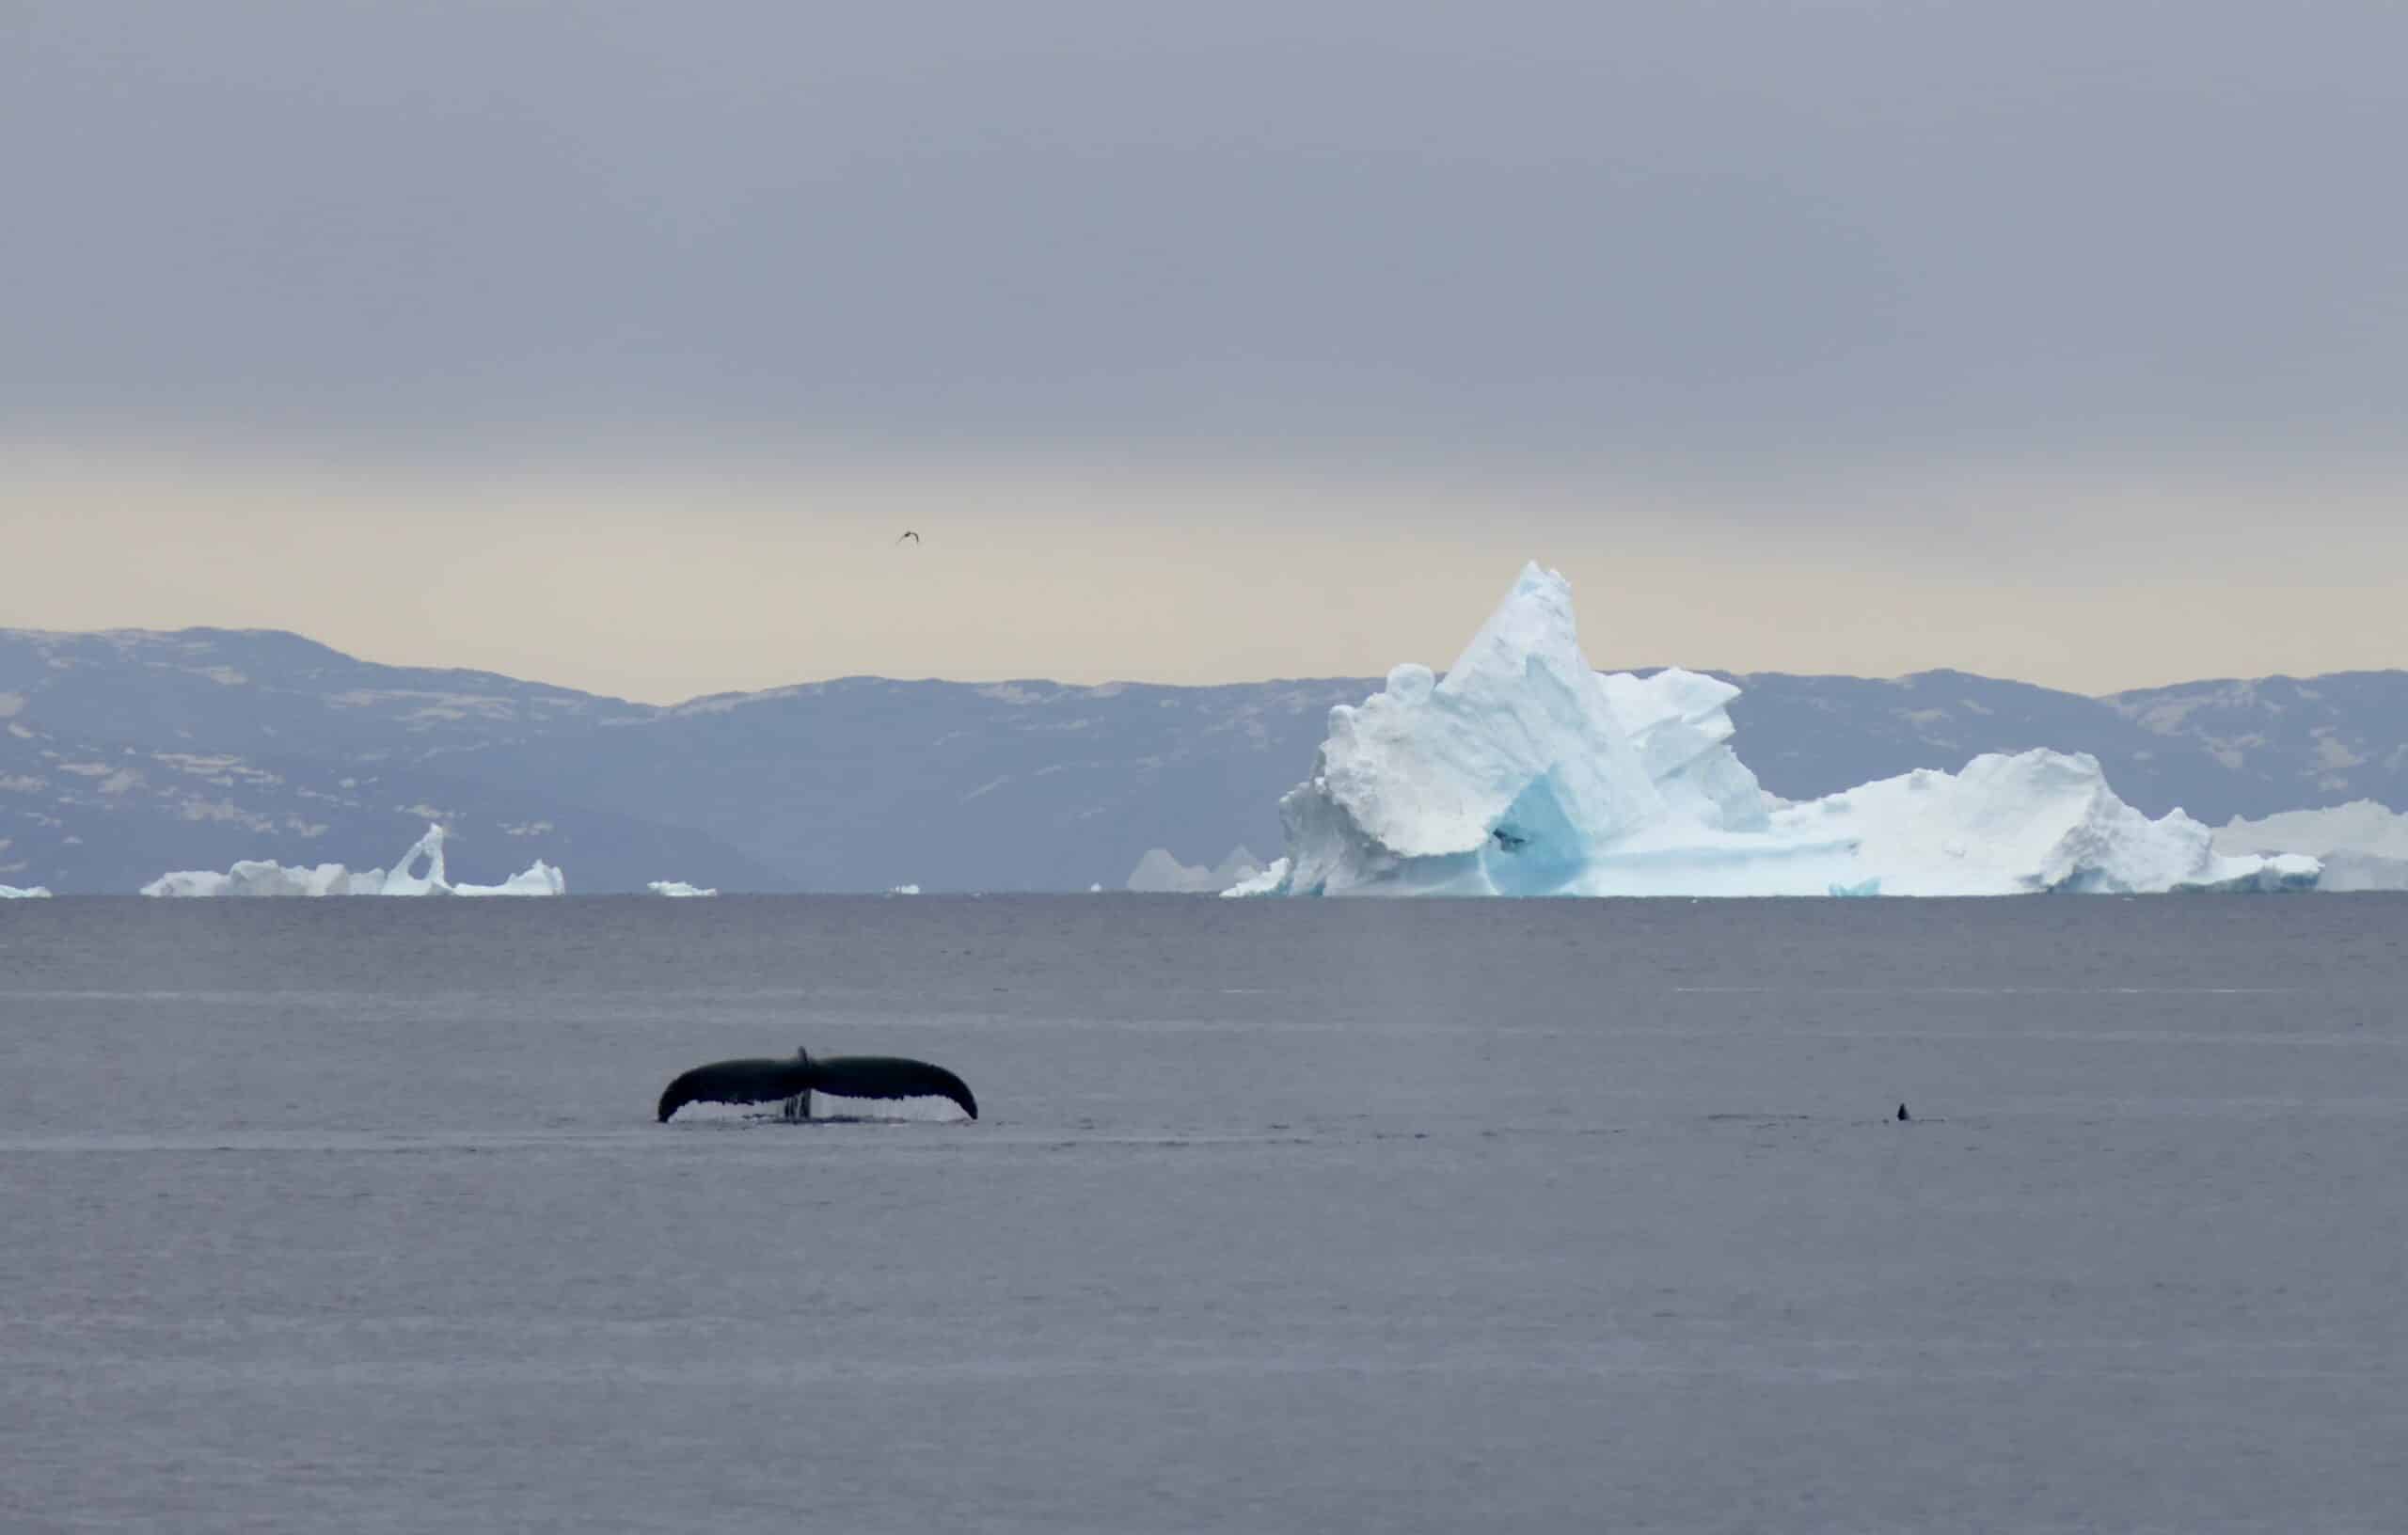 A whale tail breeching the water near an iceberg